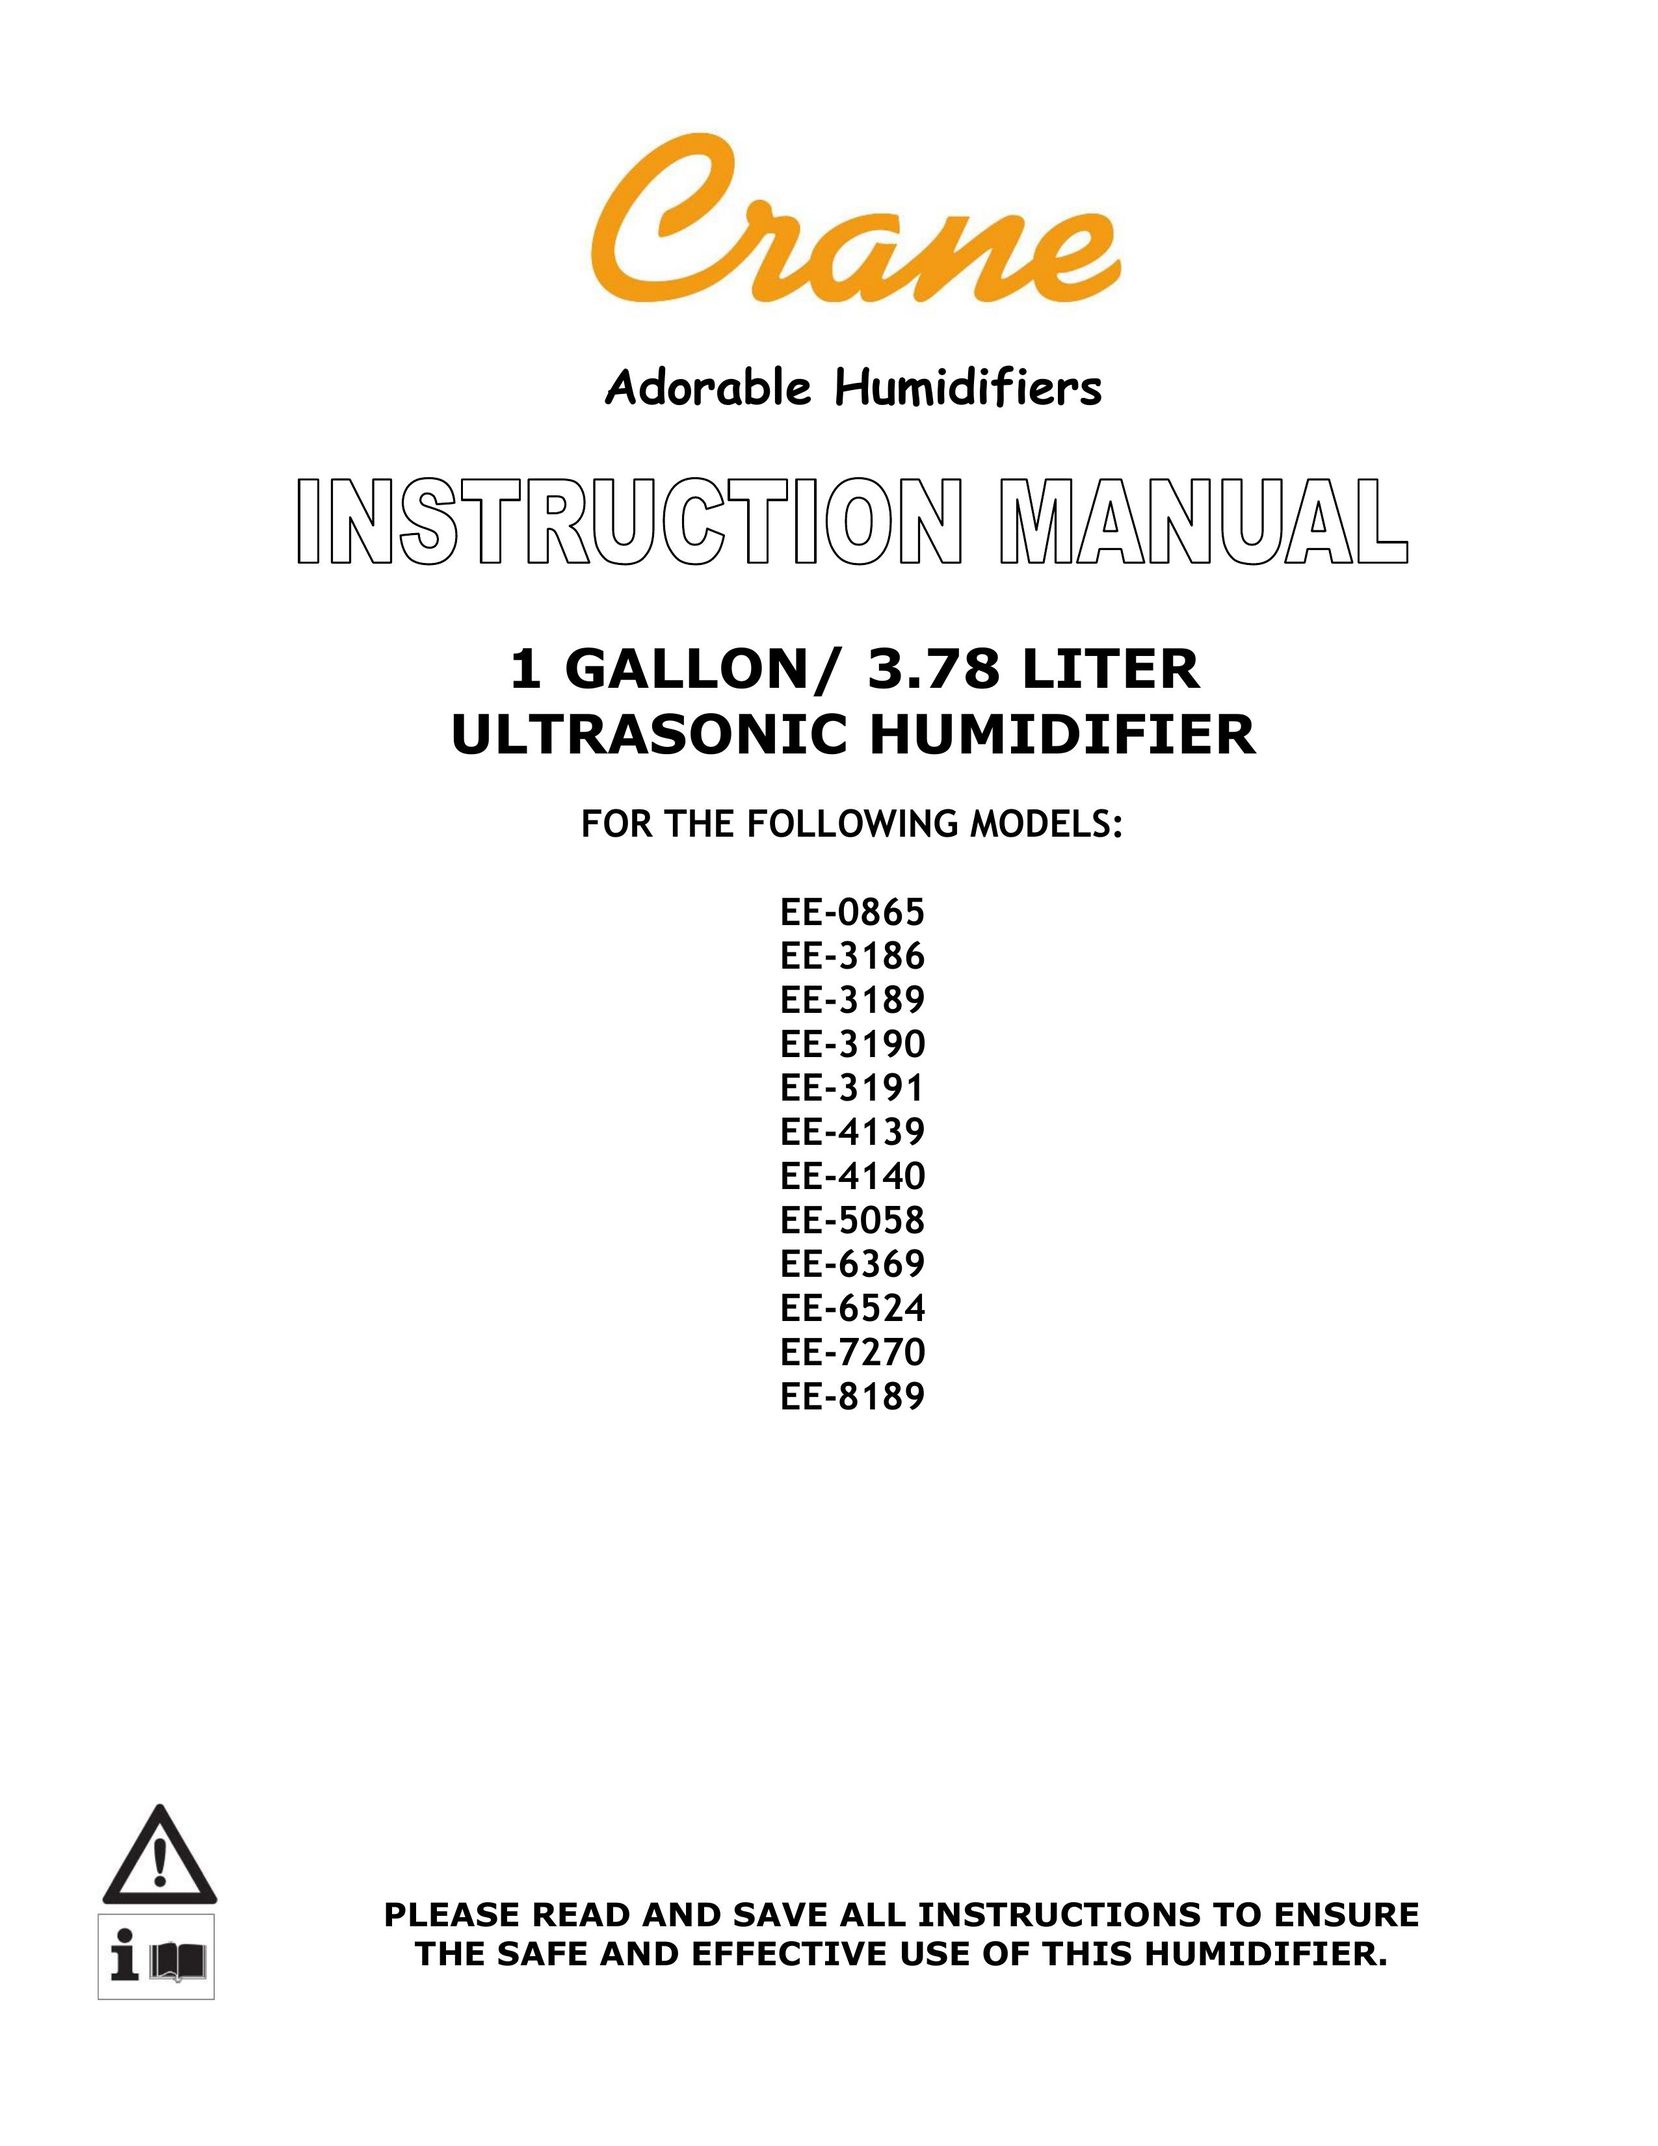 Crane EE-8189 Humidifier User Manual